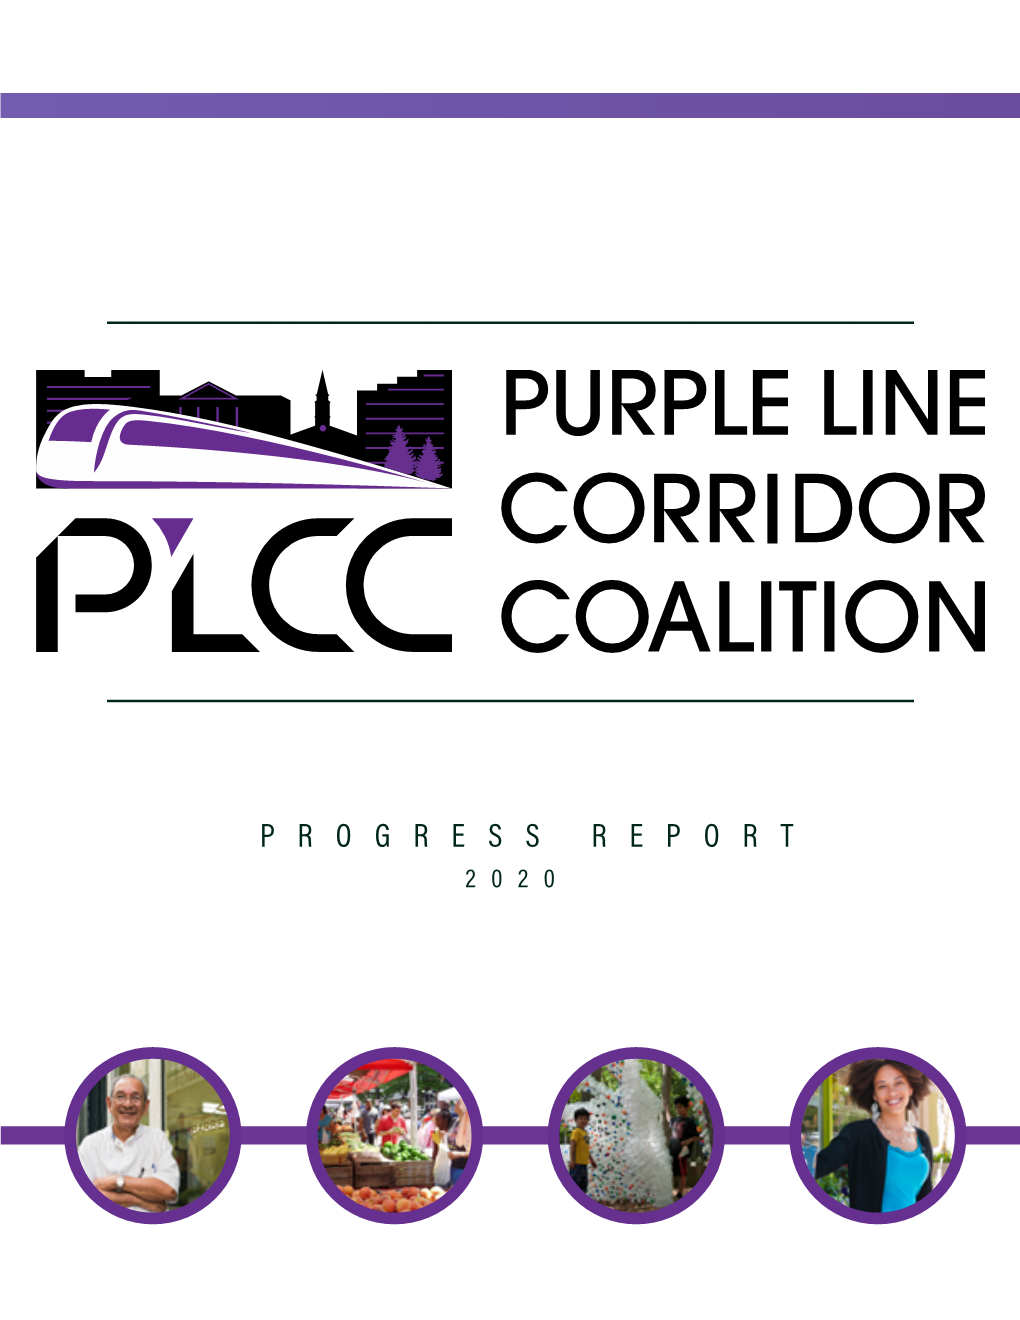 PLCC's 2020 Progress Report